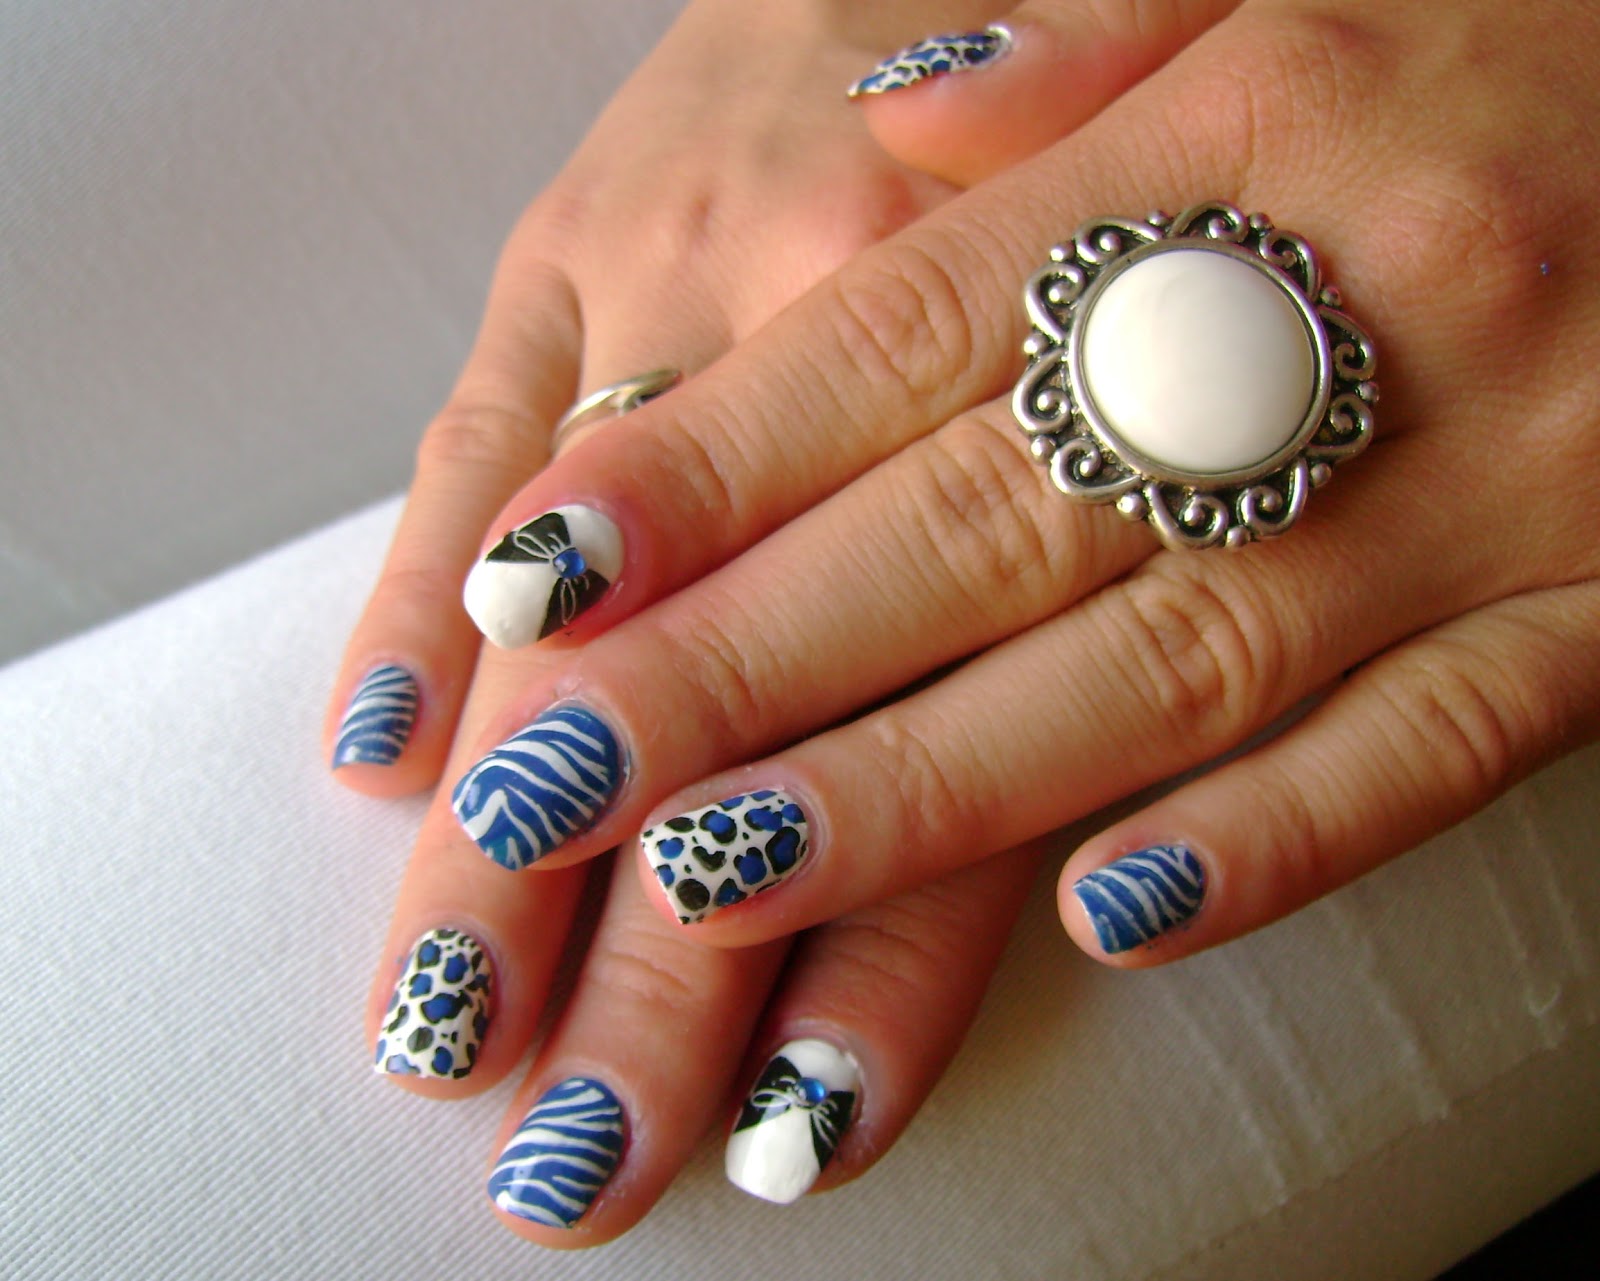 Konad Addict: White and blue manicure